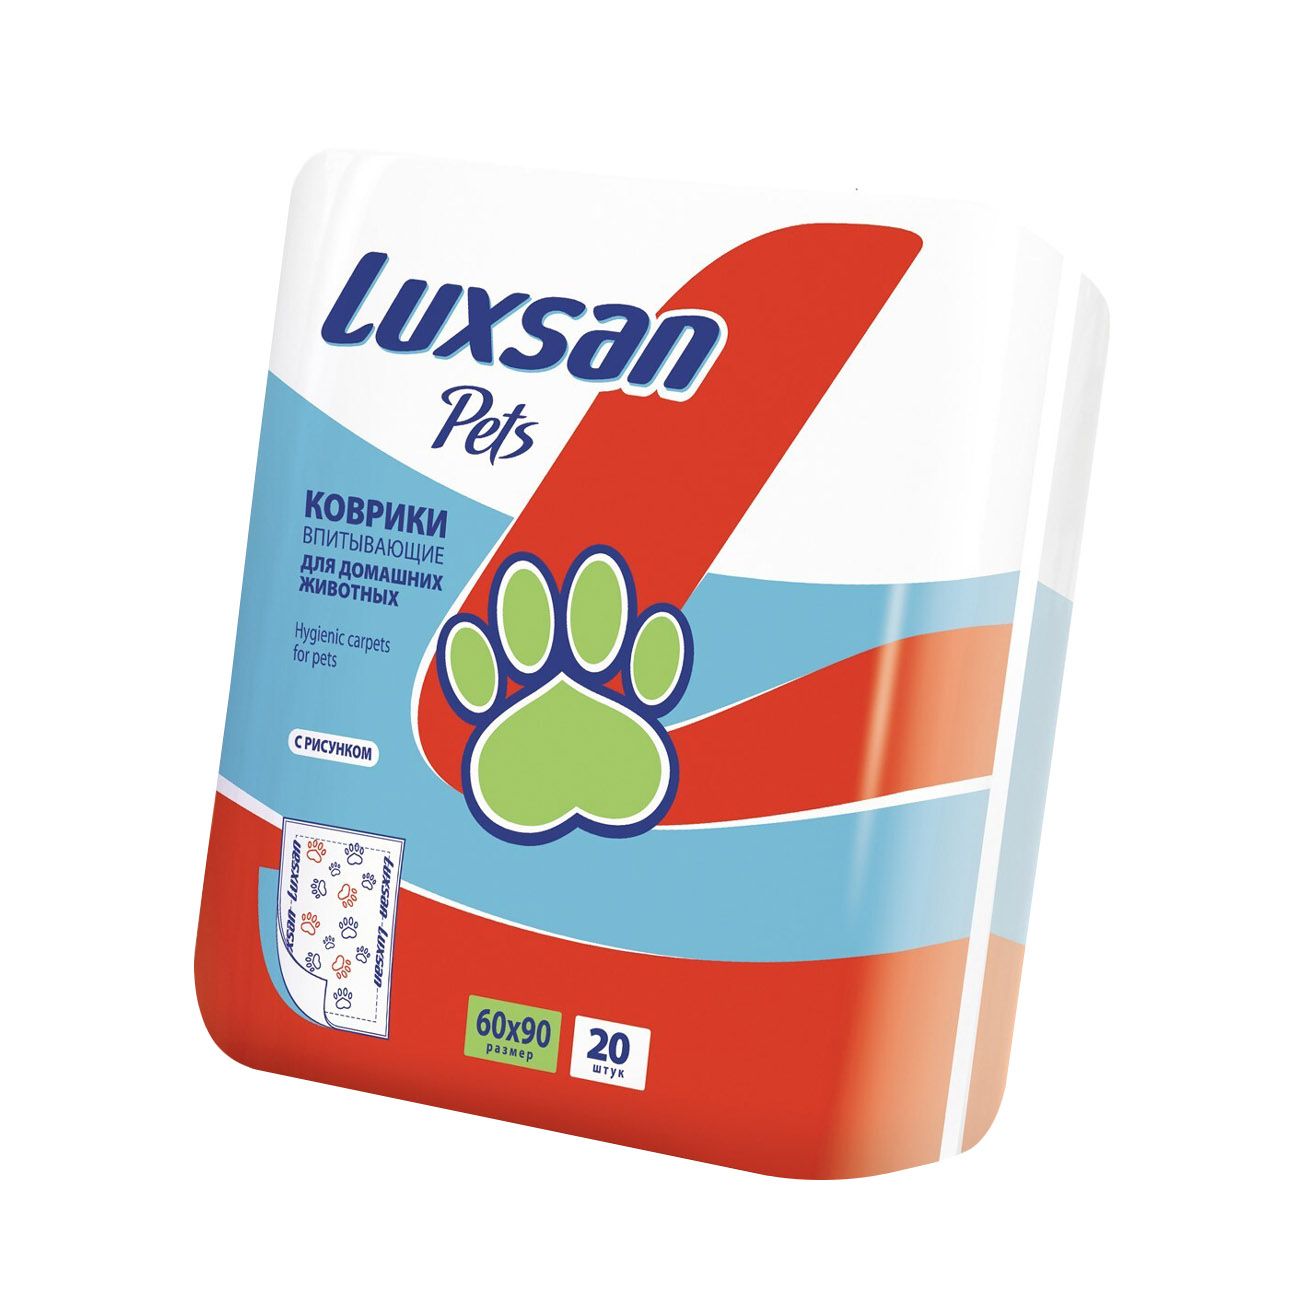 Коврик для кошек и собак Luxsan Premium с рисунком, 60*90см 20шт